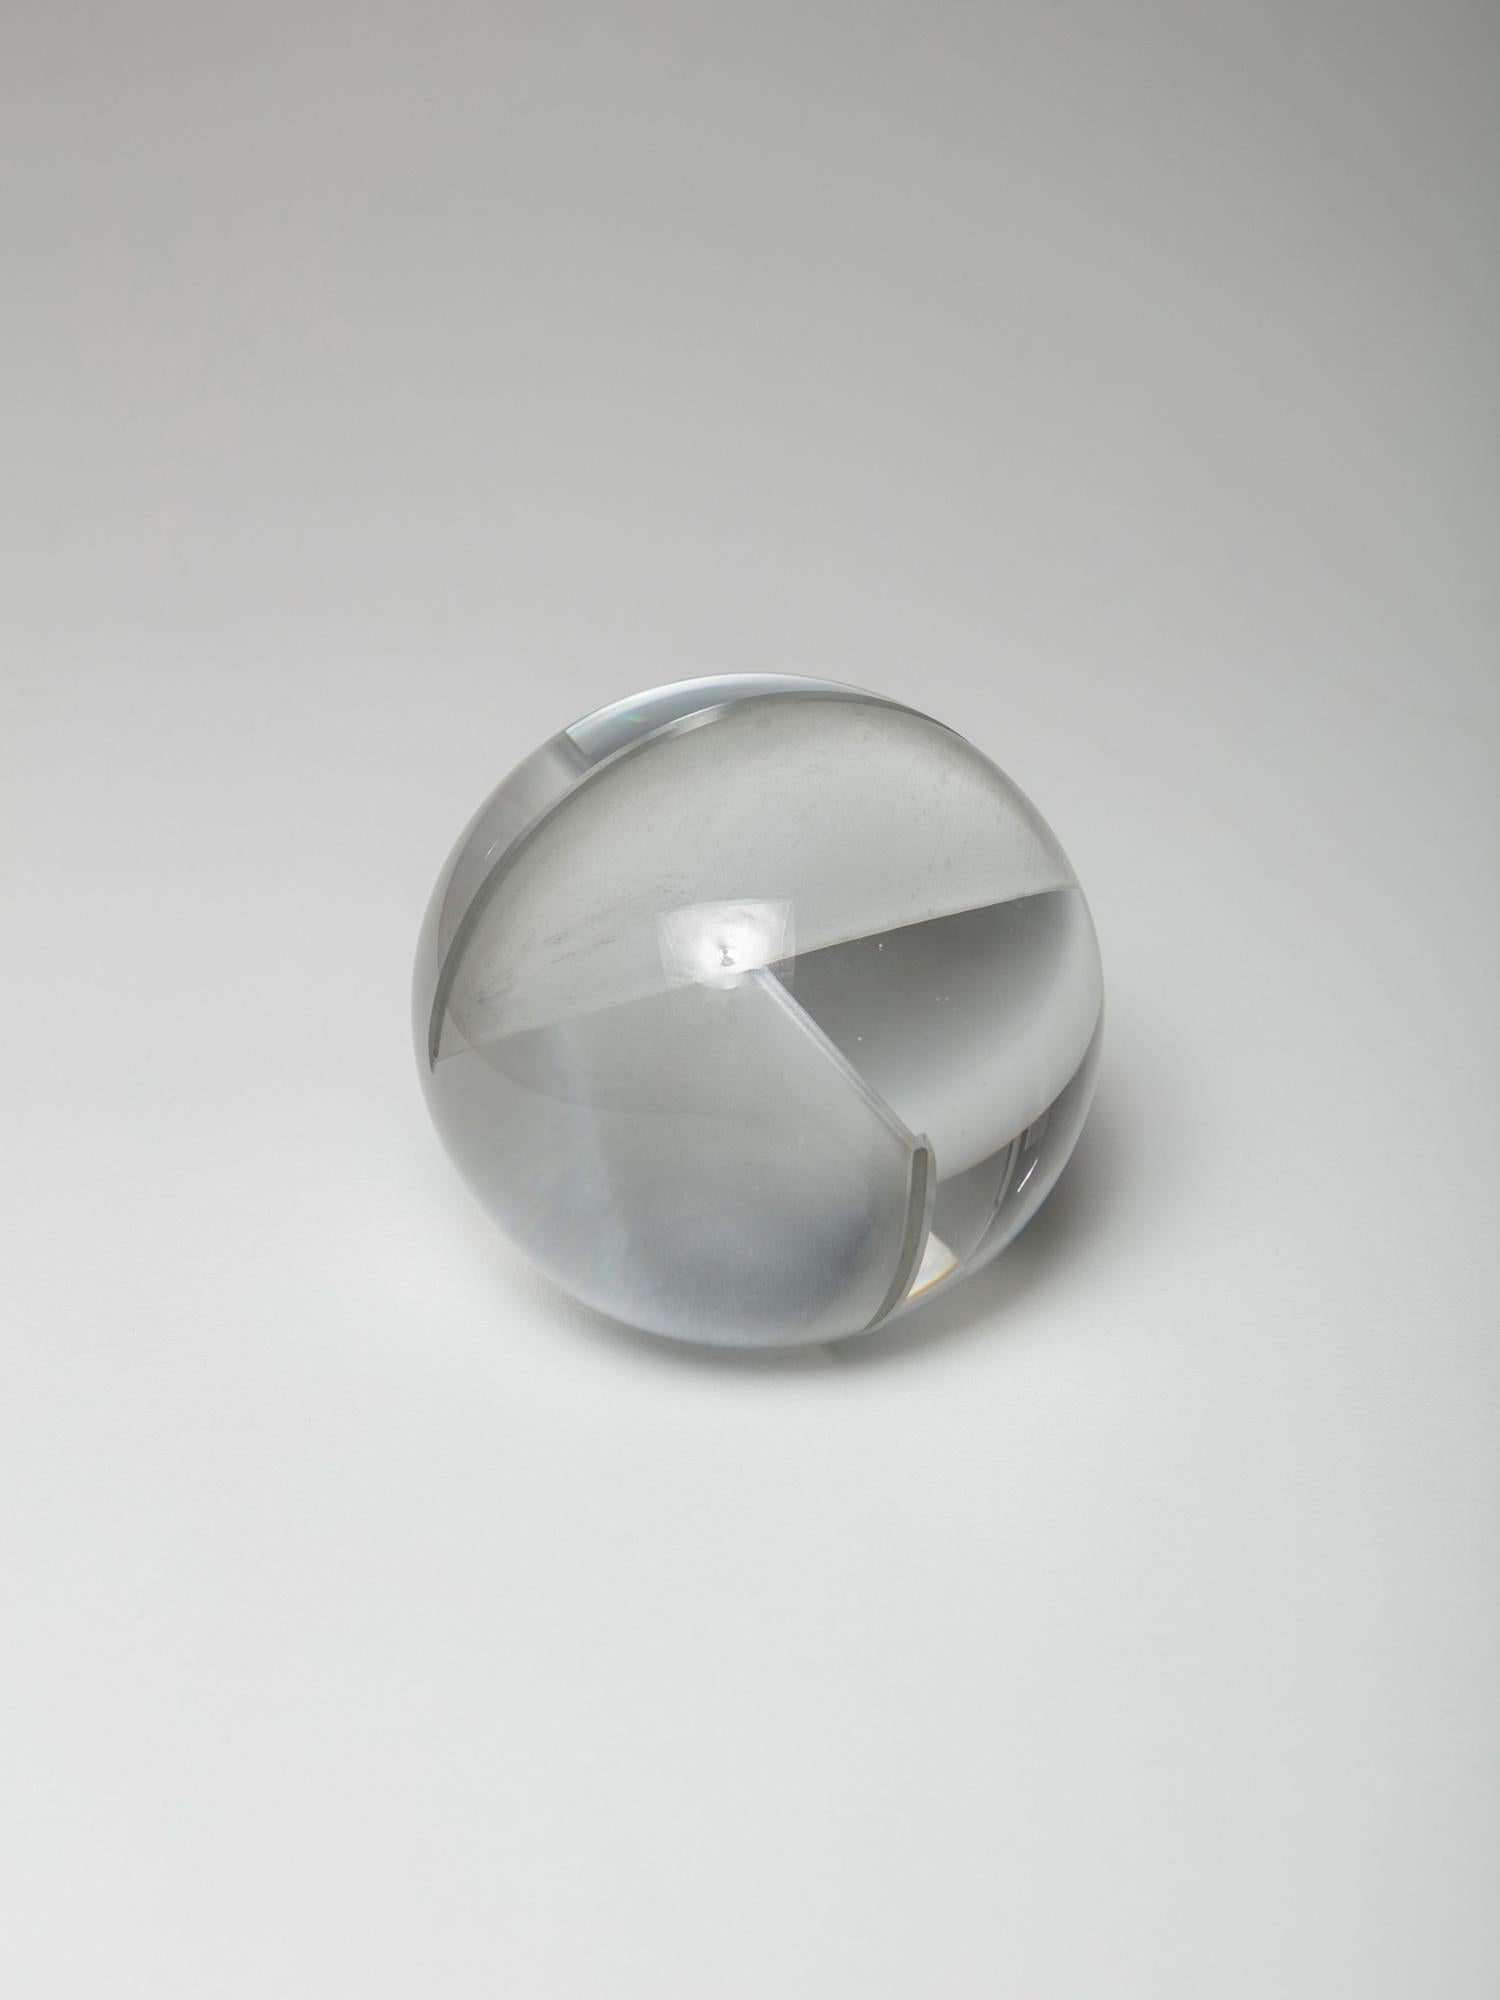 Minimalist Crystal Spherical Sculpture by Floris Meydam for Leerdam, Netherlands, 1960s